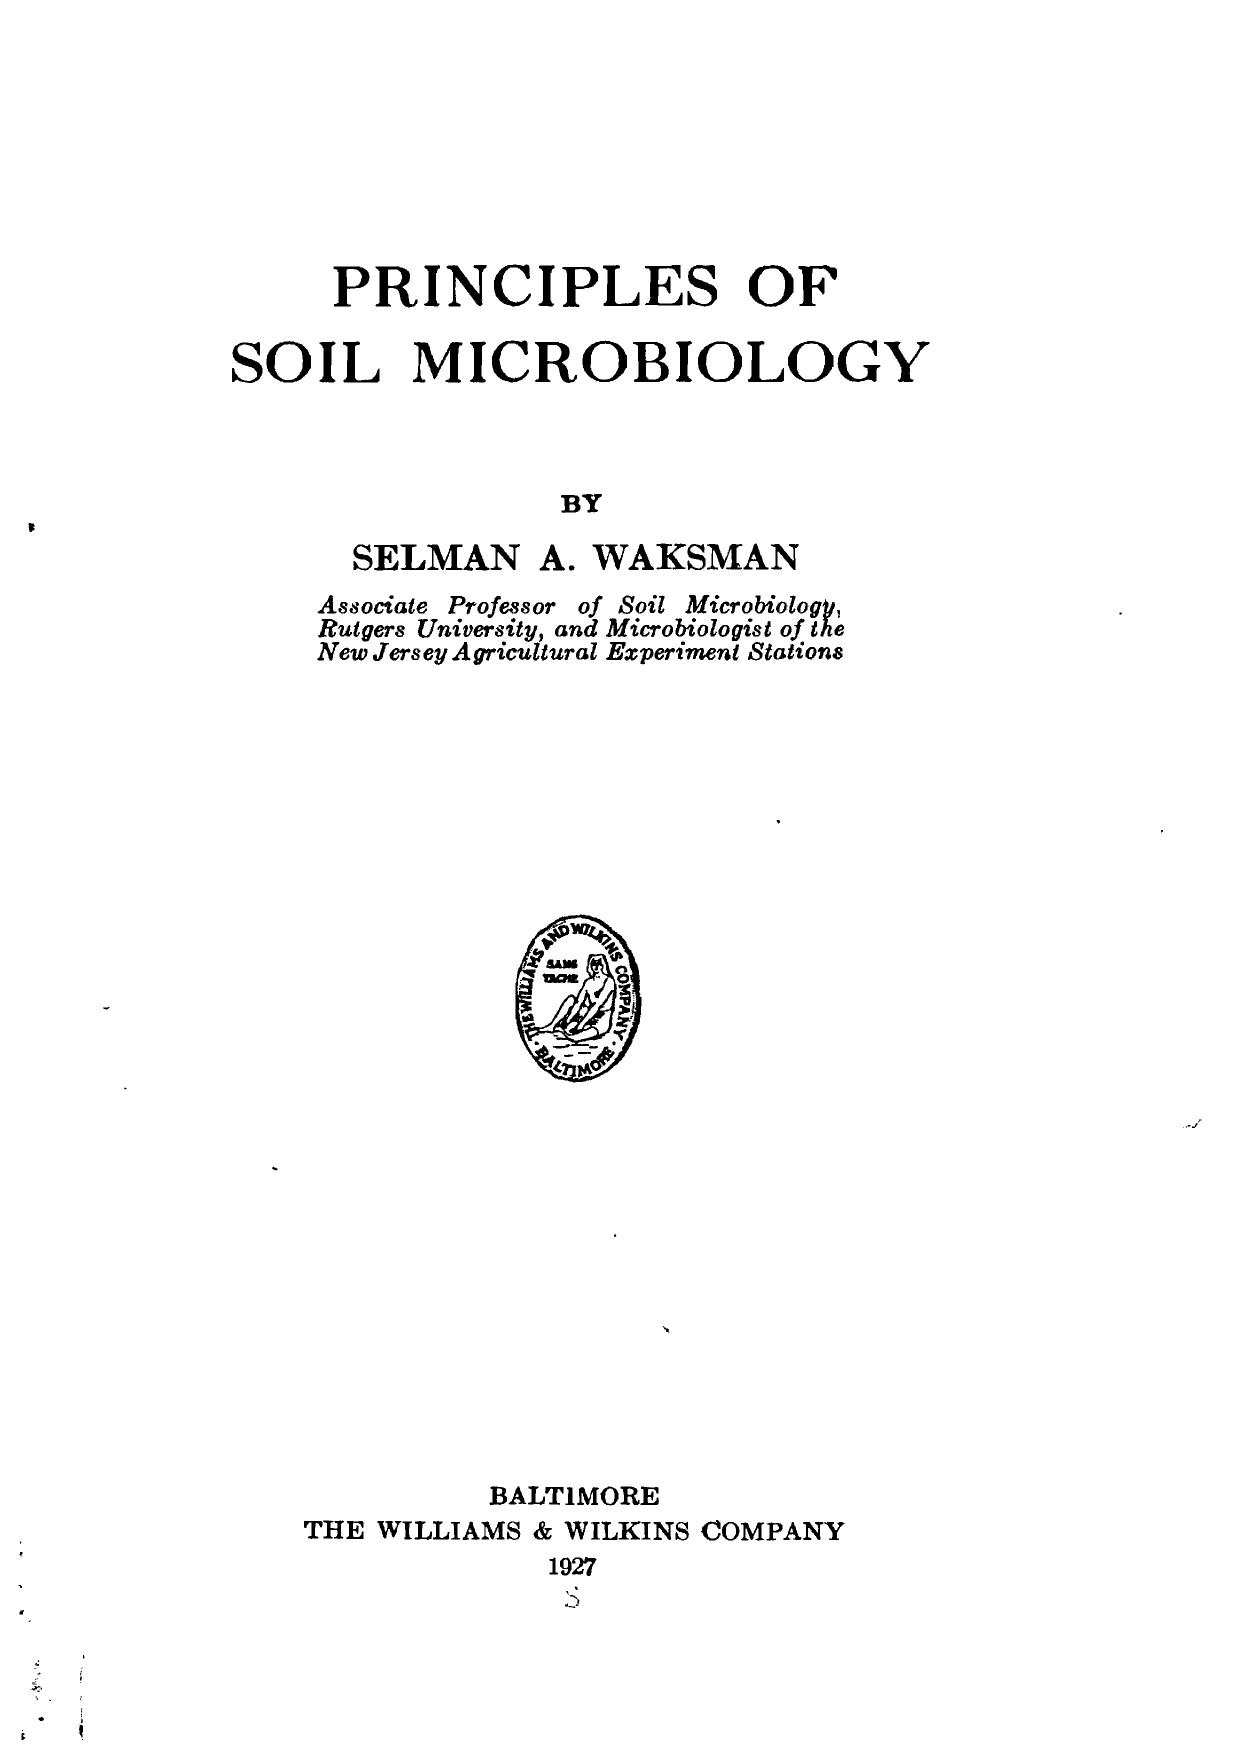 http://www.journeytoforever.org/farm_library/Waksman_Principles-of-soil.pdf